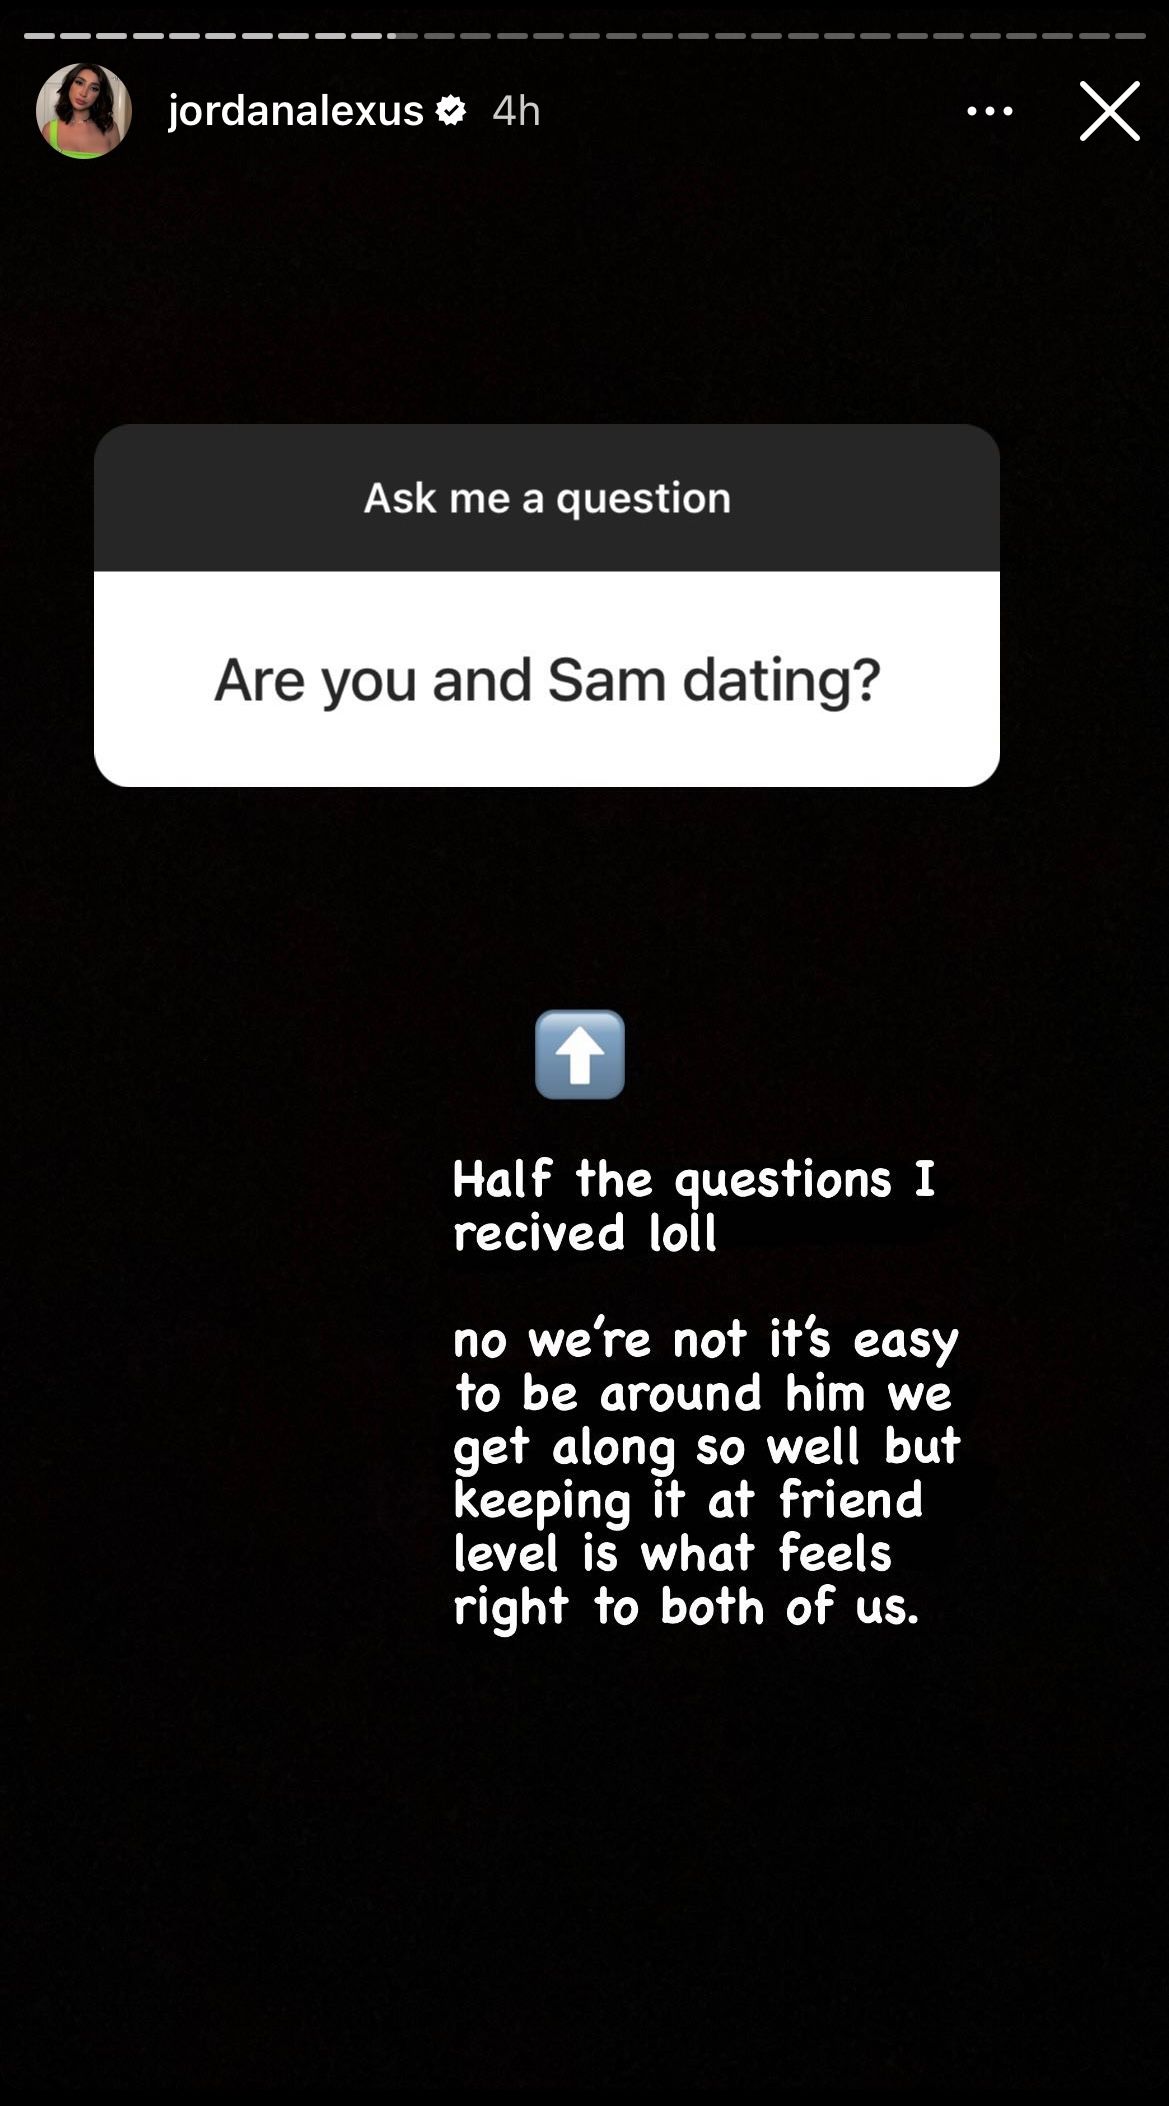 Siesta Key: Jordana Barnes Confirms She is Not Dating Sam Logan